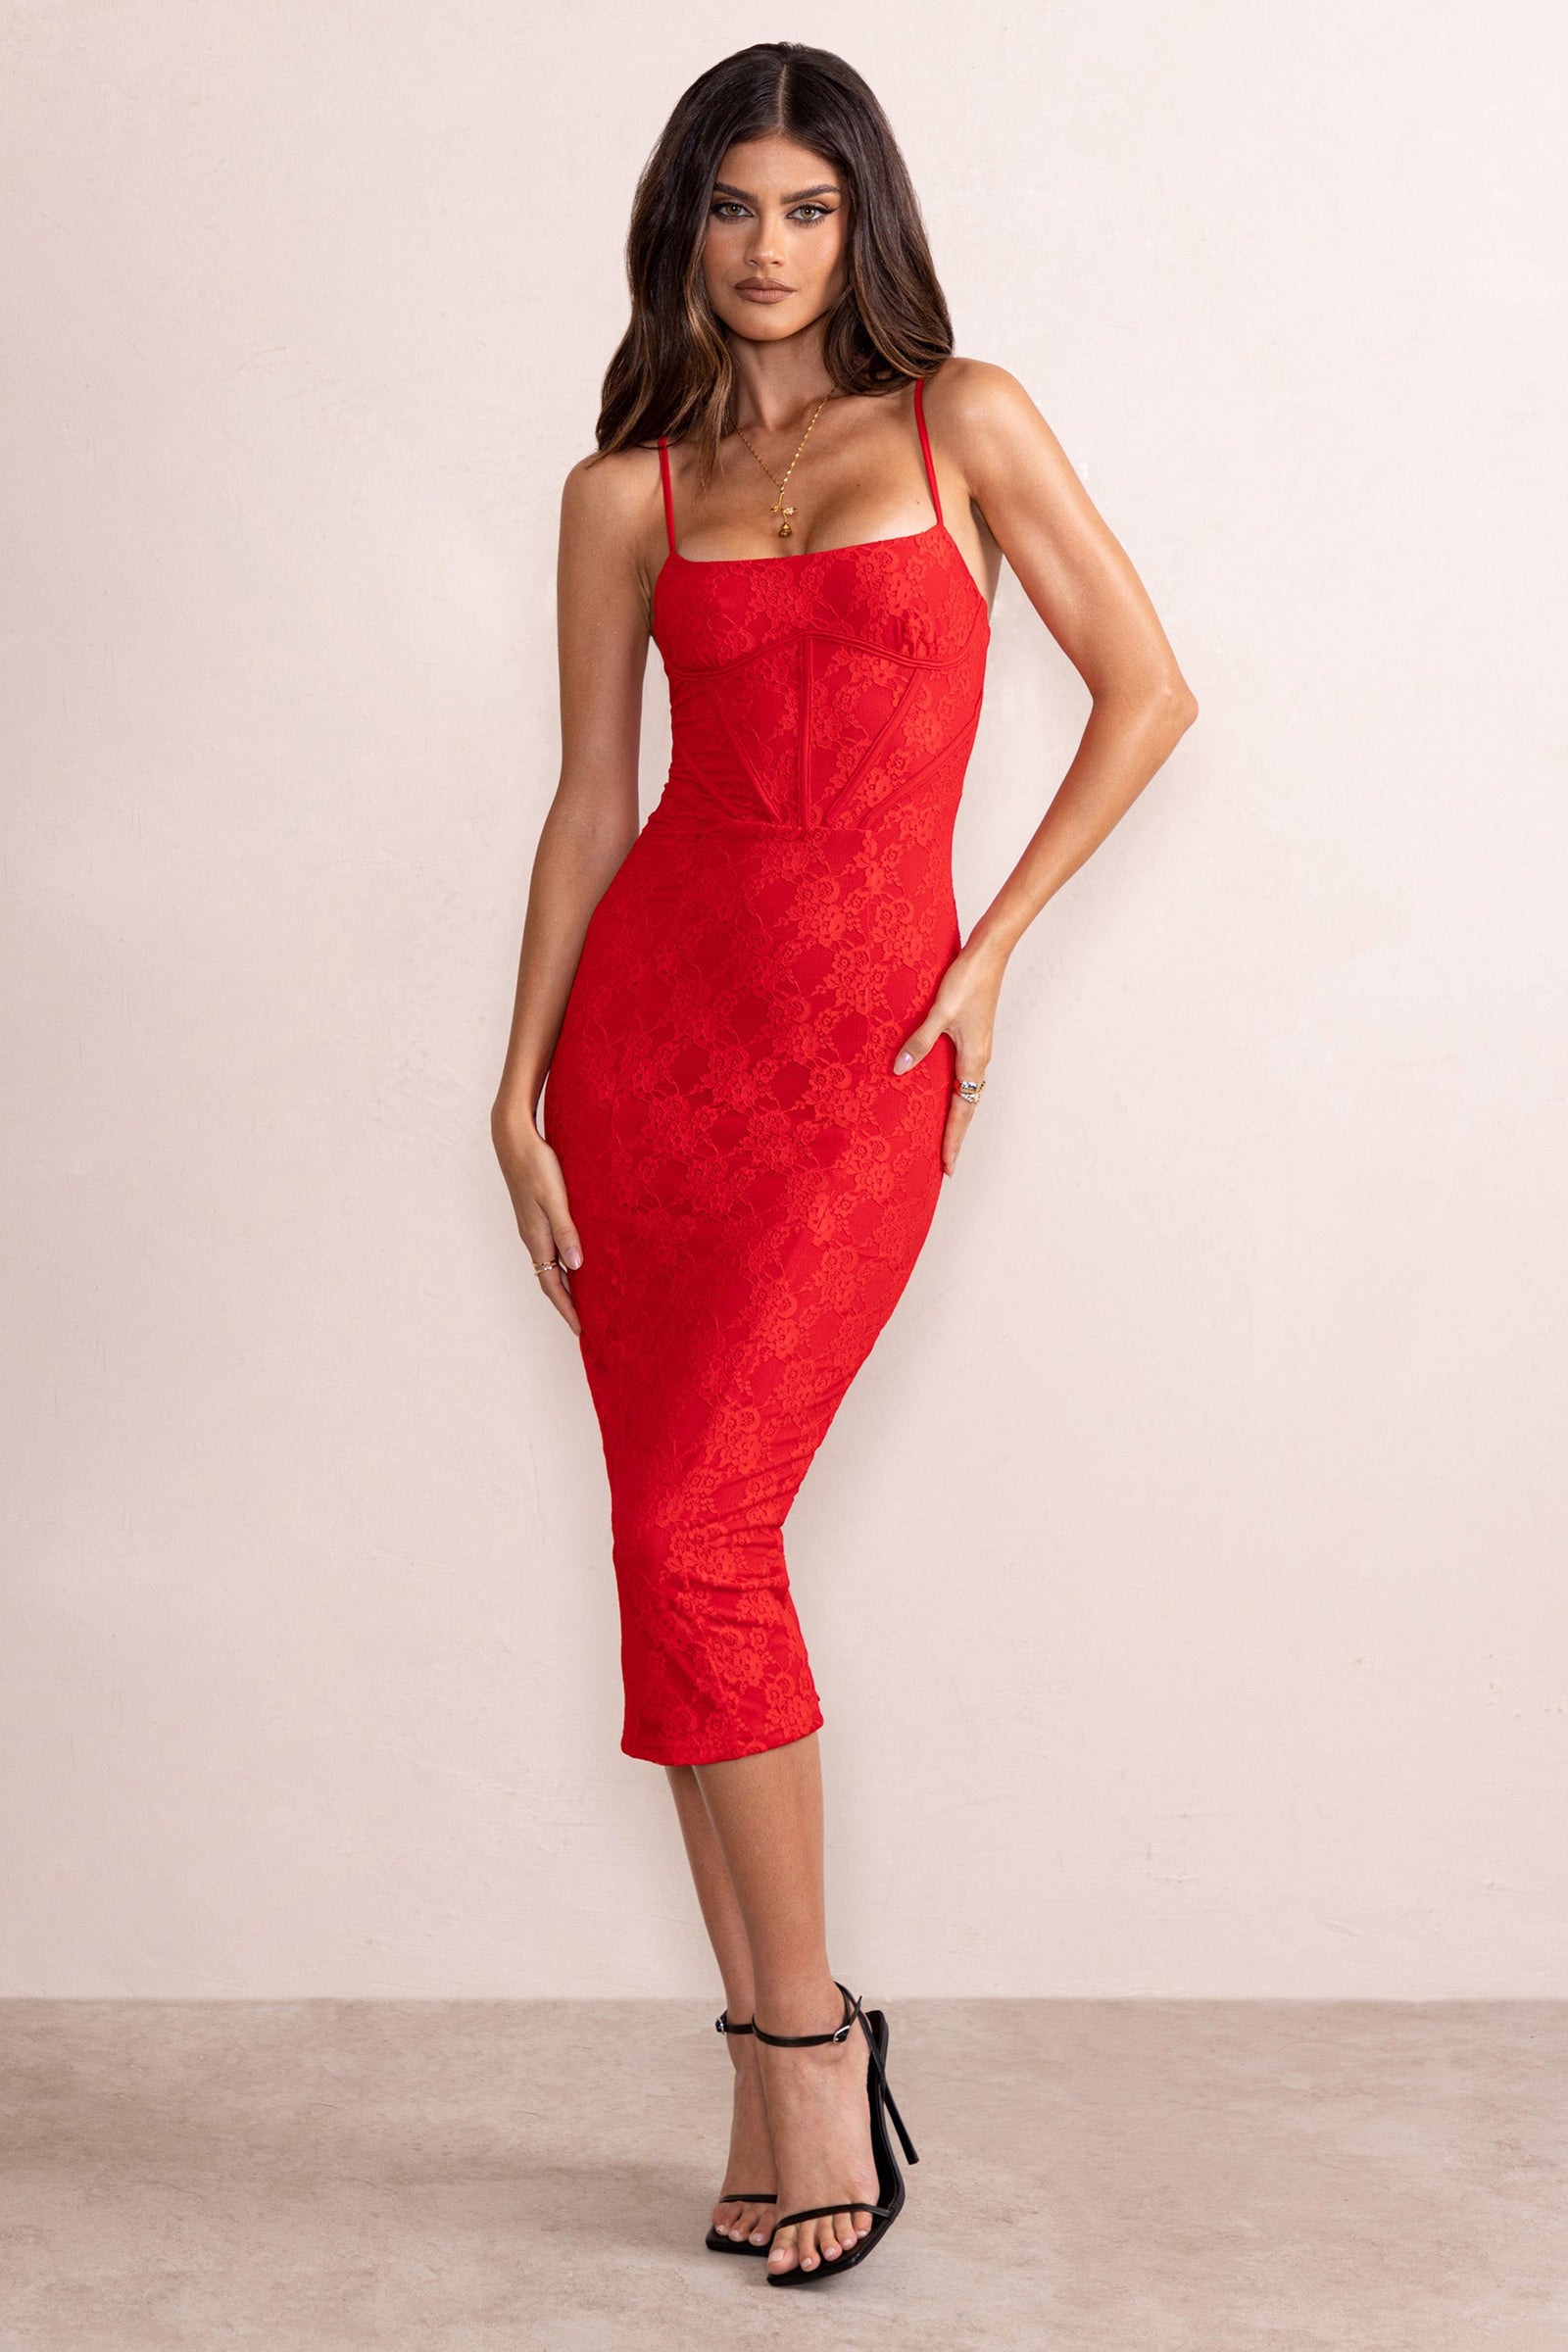 16+ Red Strapless Corset Dress